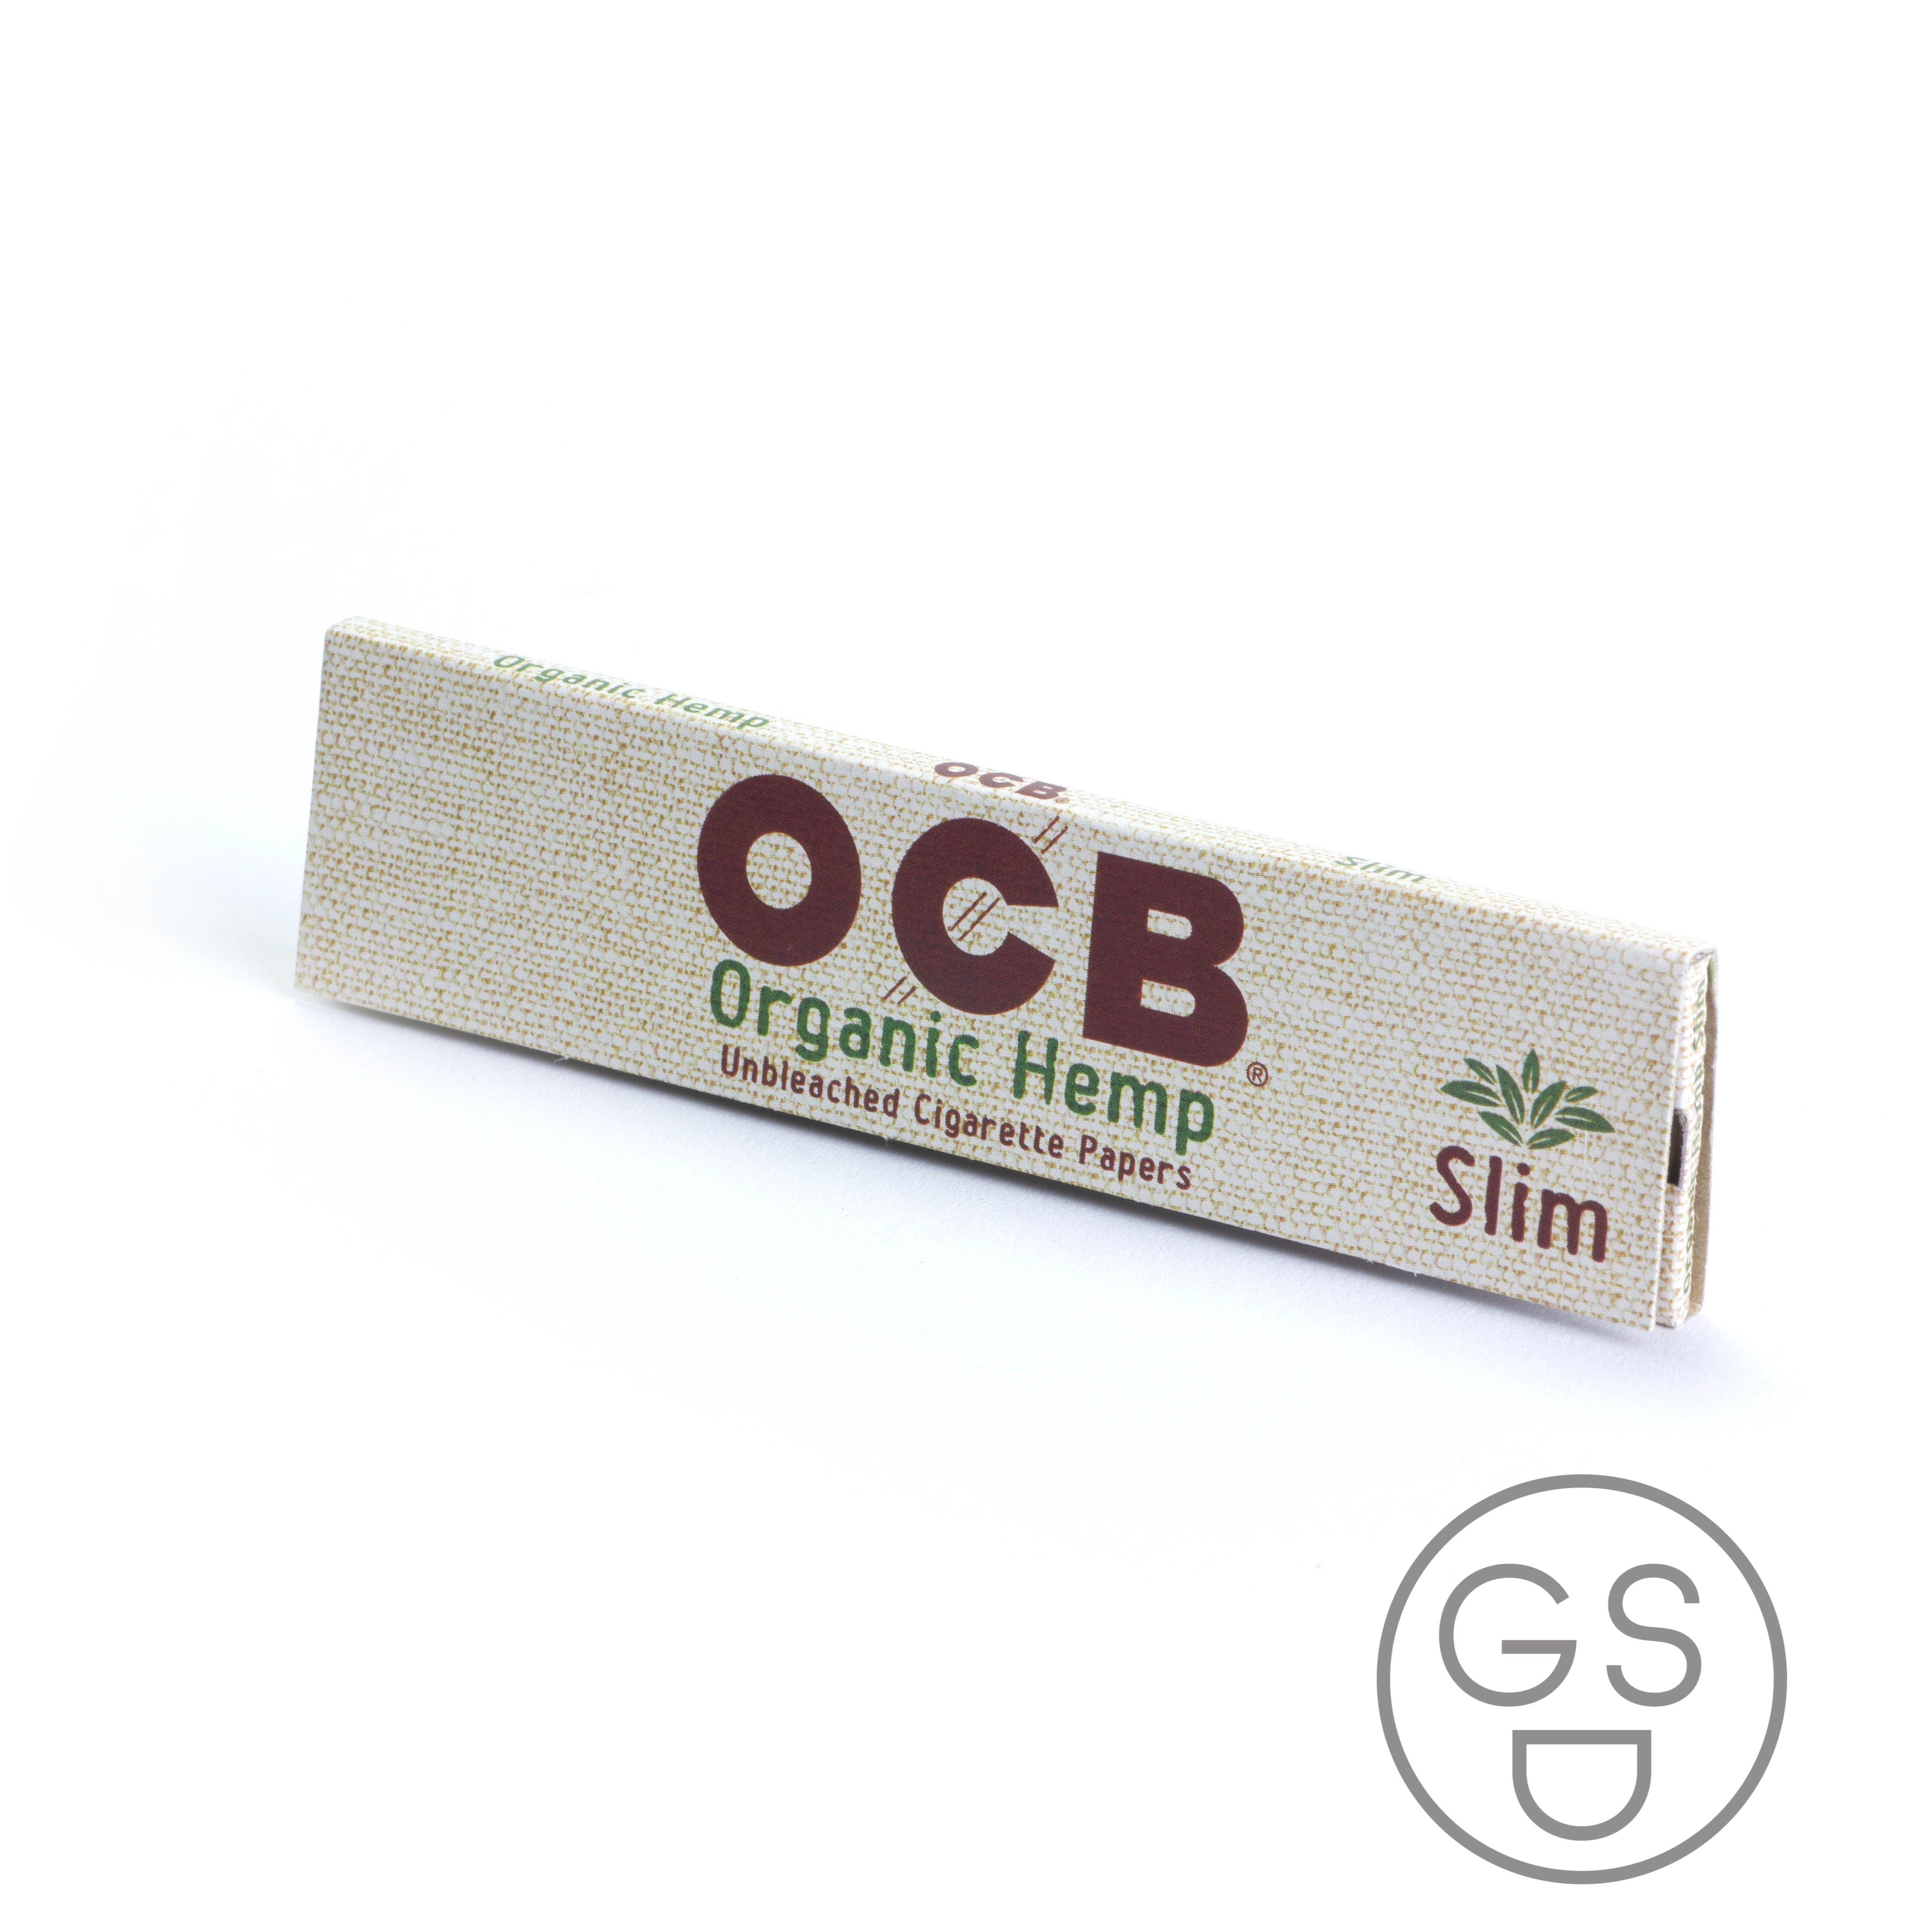 OCB Organic Hemp Slim - 32 Pack